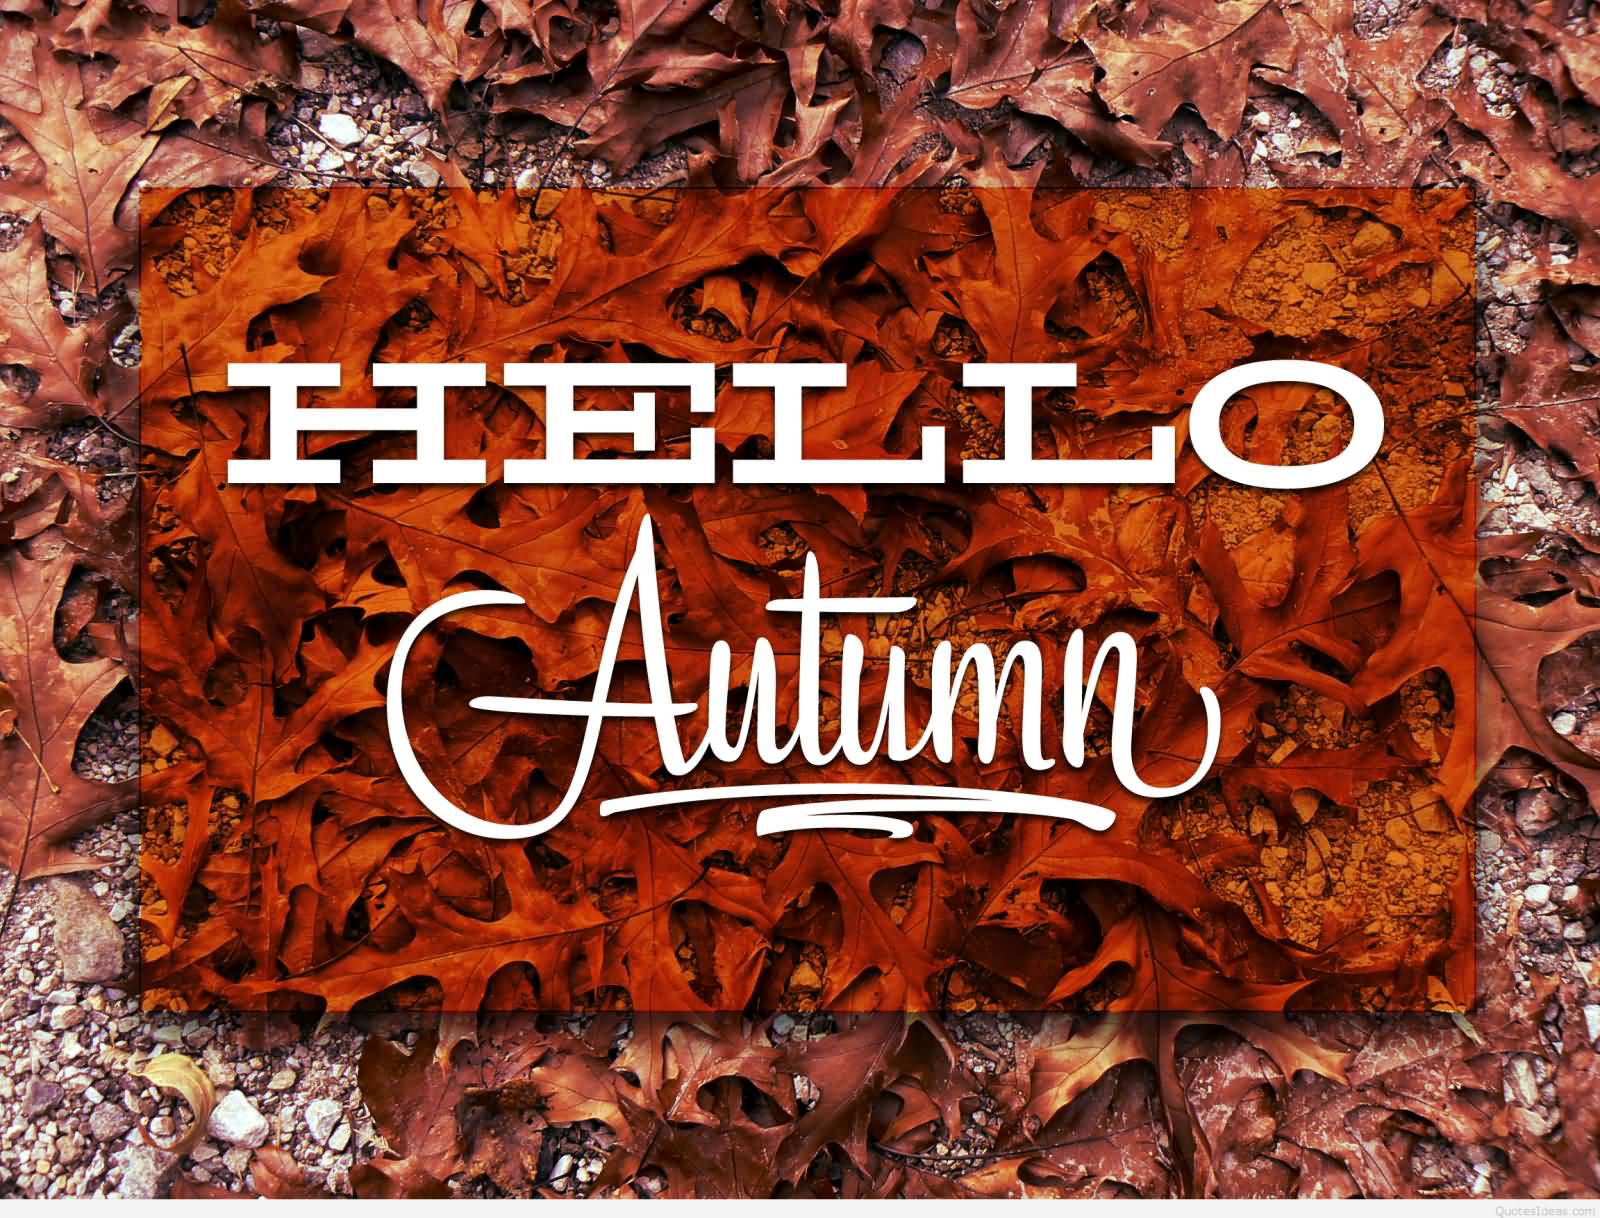 Hello Autumn Wishes Picture